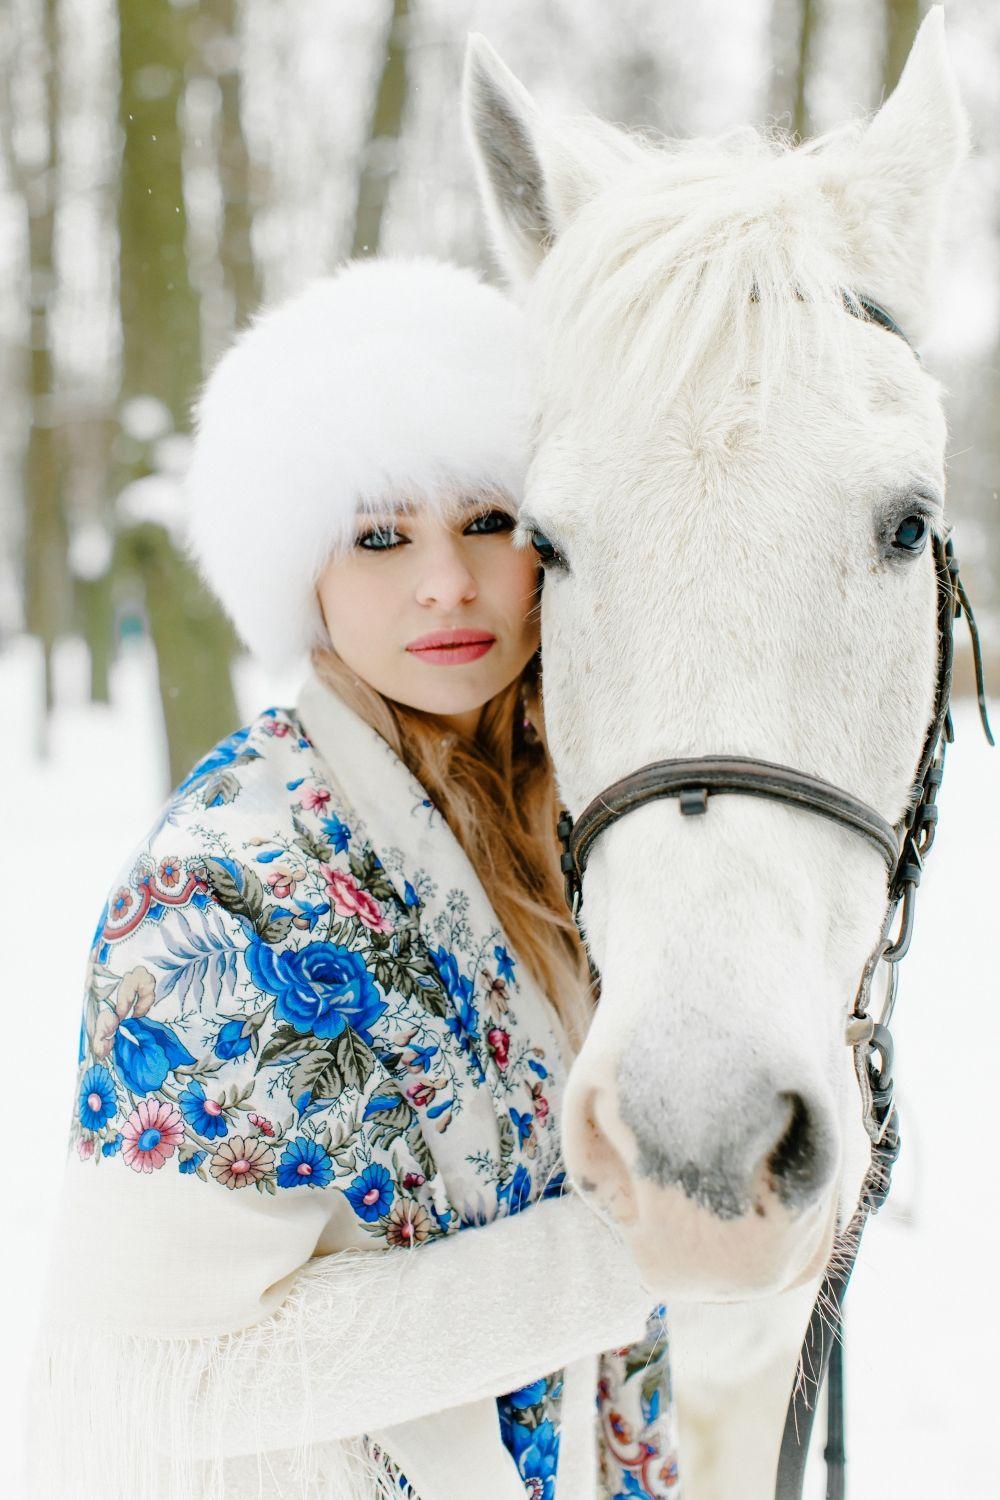 Картинки лошади зимой фотографии